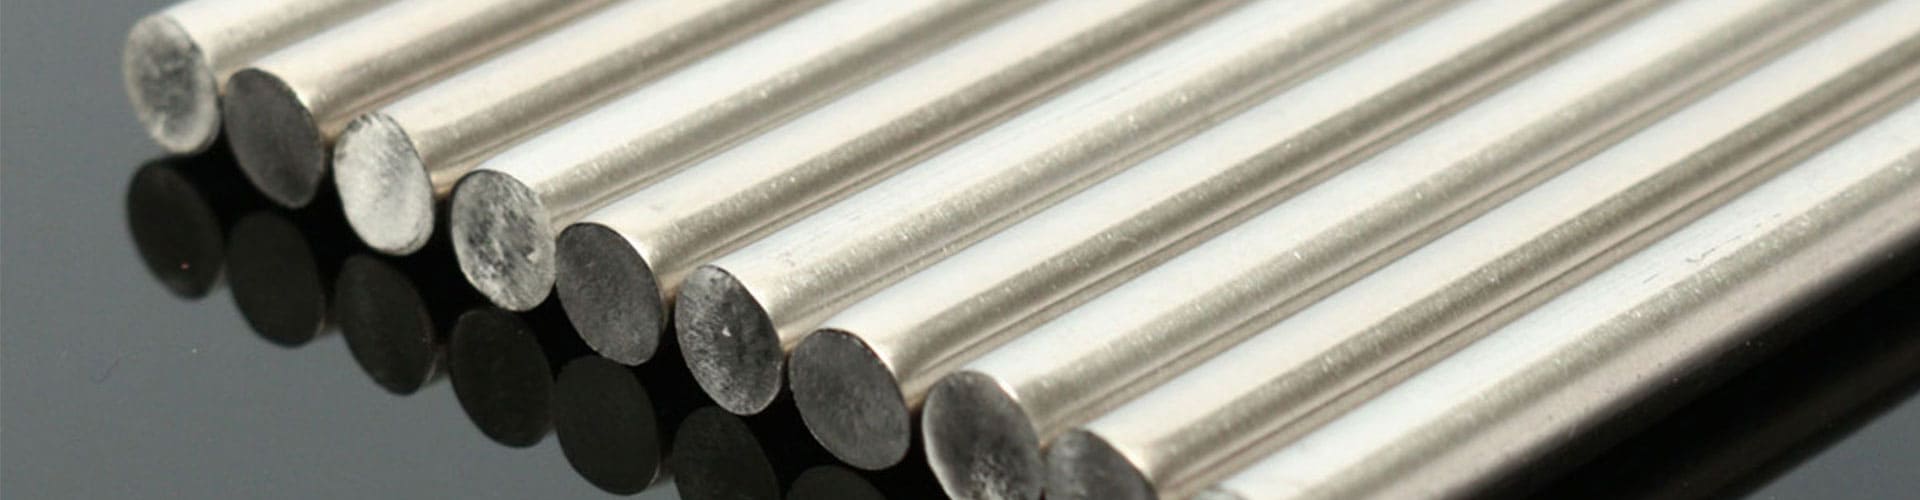 nickel-alloy-201-round-bars-rods-manufacturer-exporter-supplier-in-kazakhstan